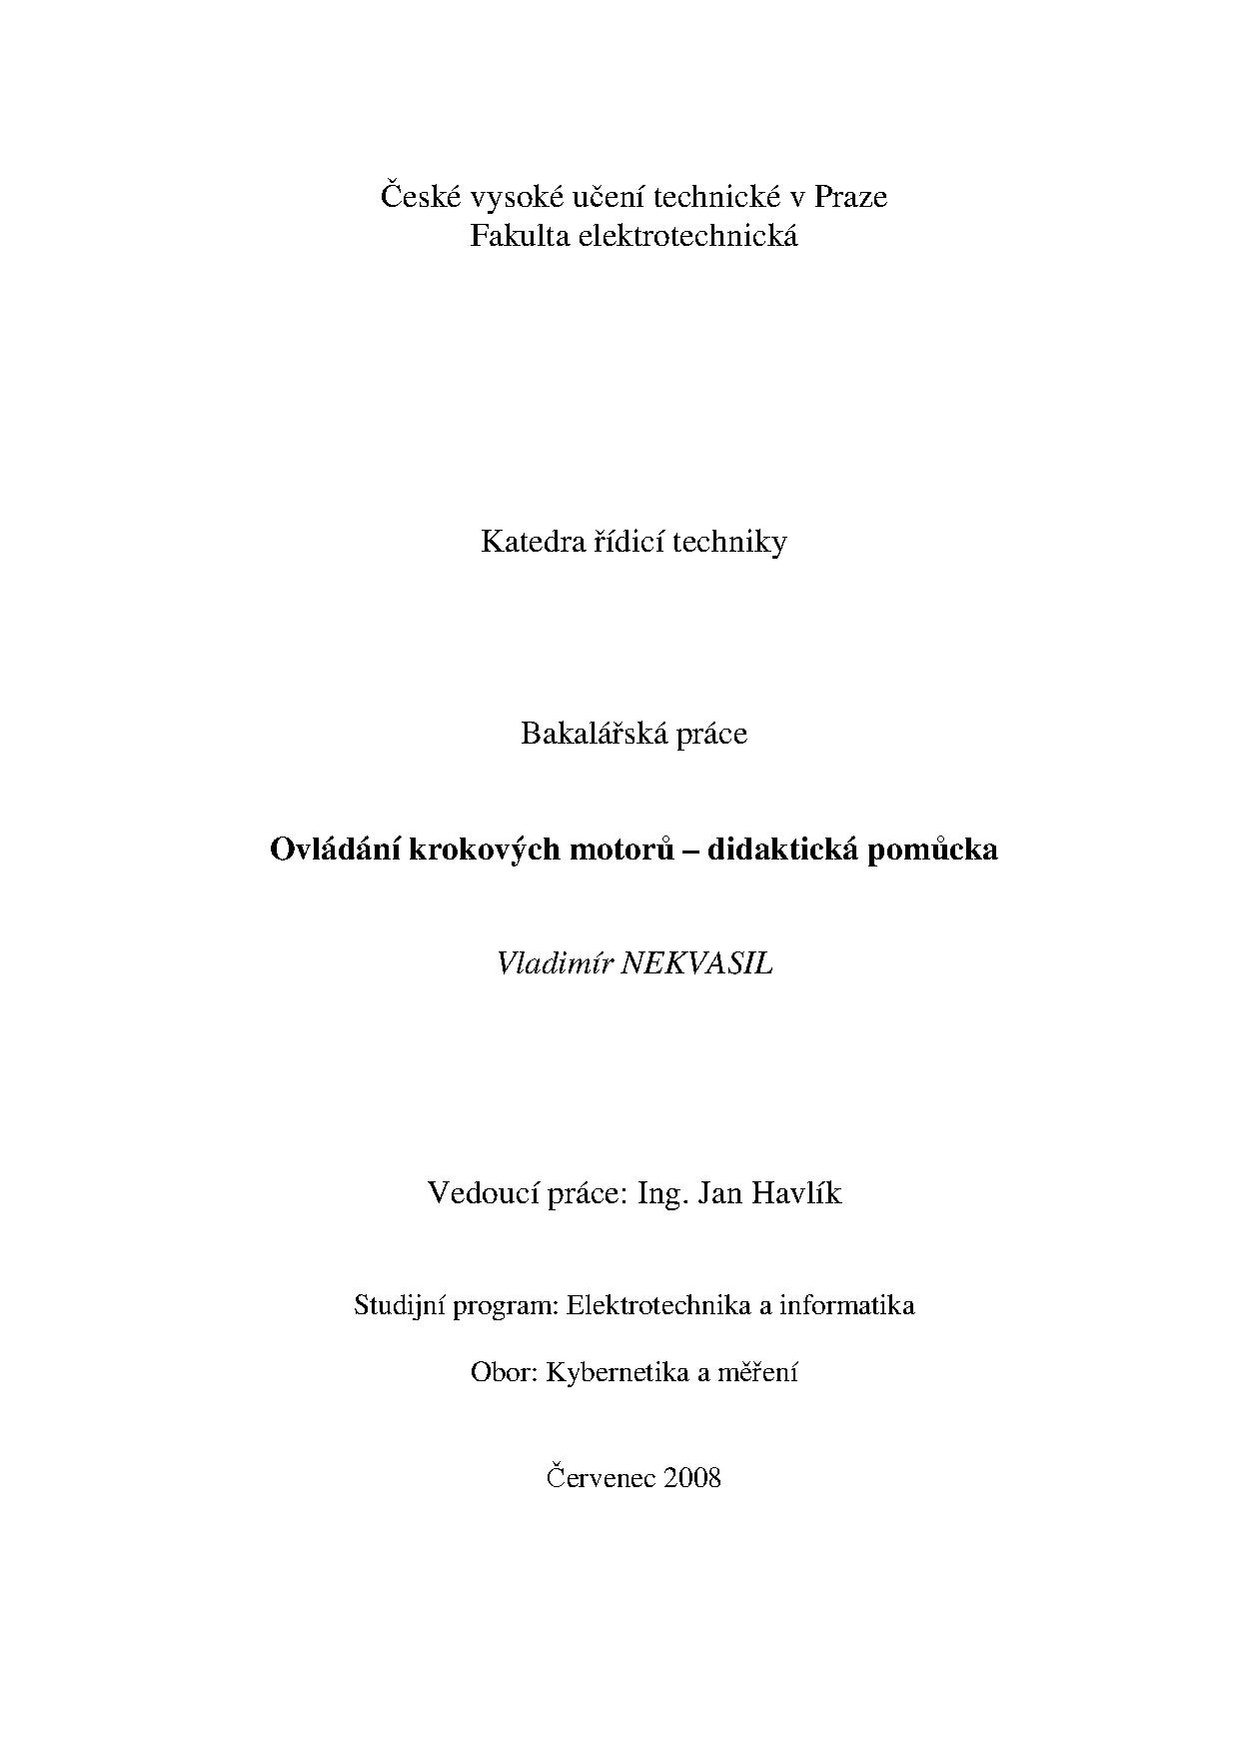 Bp 2008 nekvasil vladimir.pdf